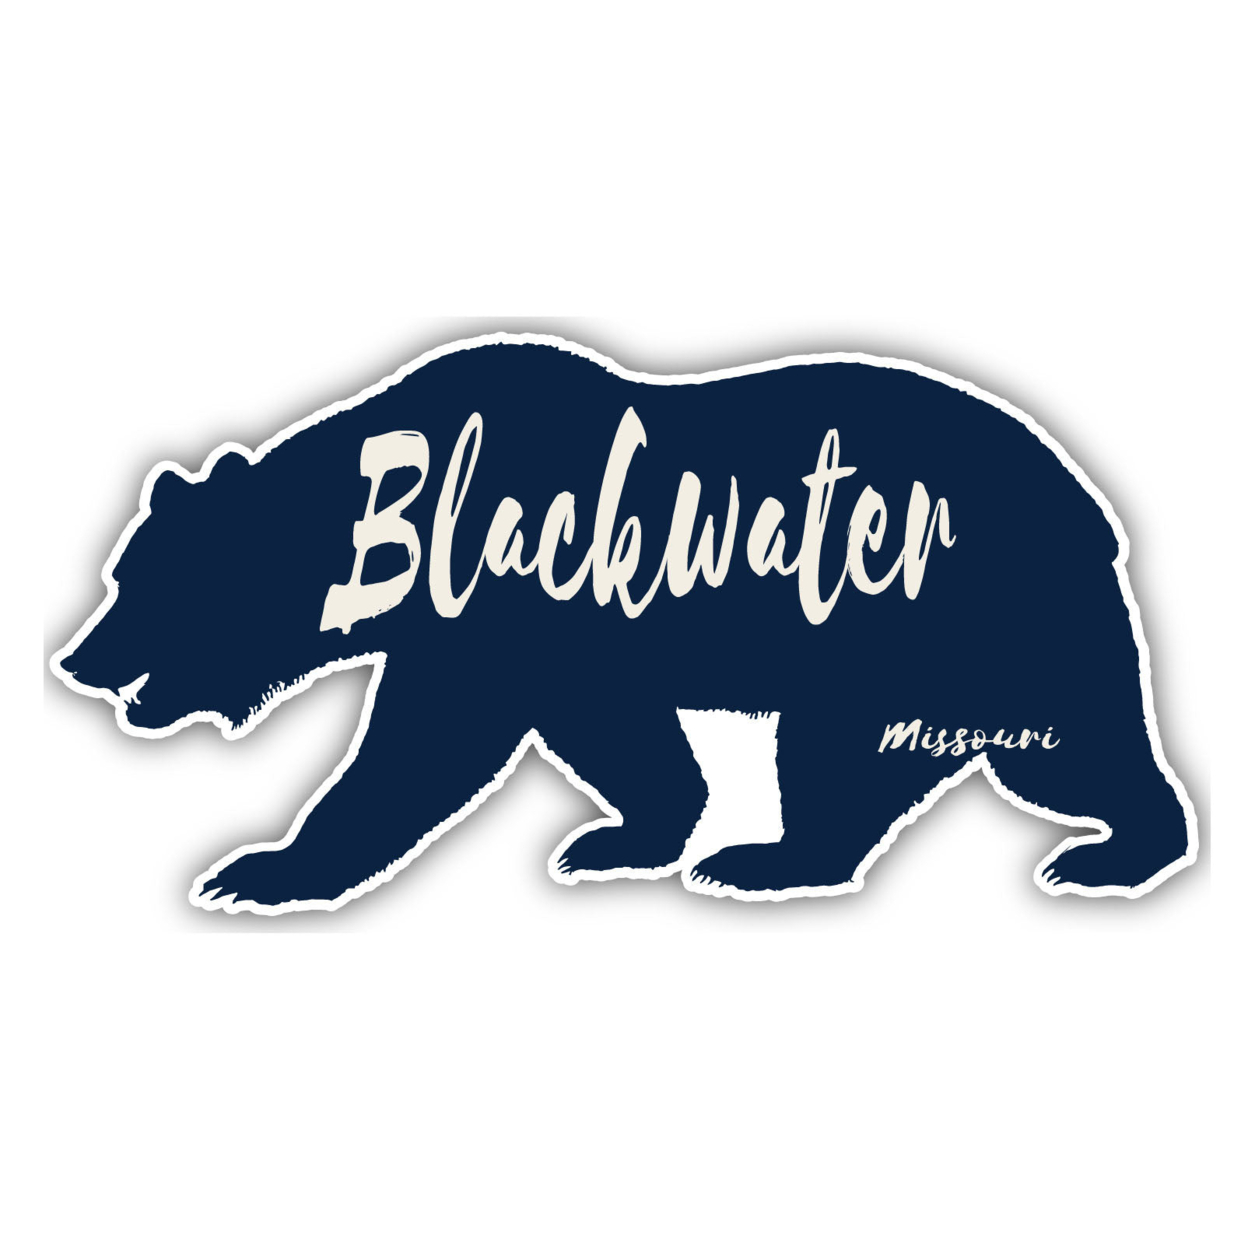 Blackwater Missouri Souvenir Decorative Stickers (Choose Theme And Size) - 4-Pack, 8-Inch, Bear